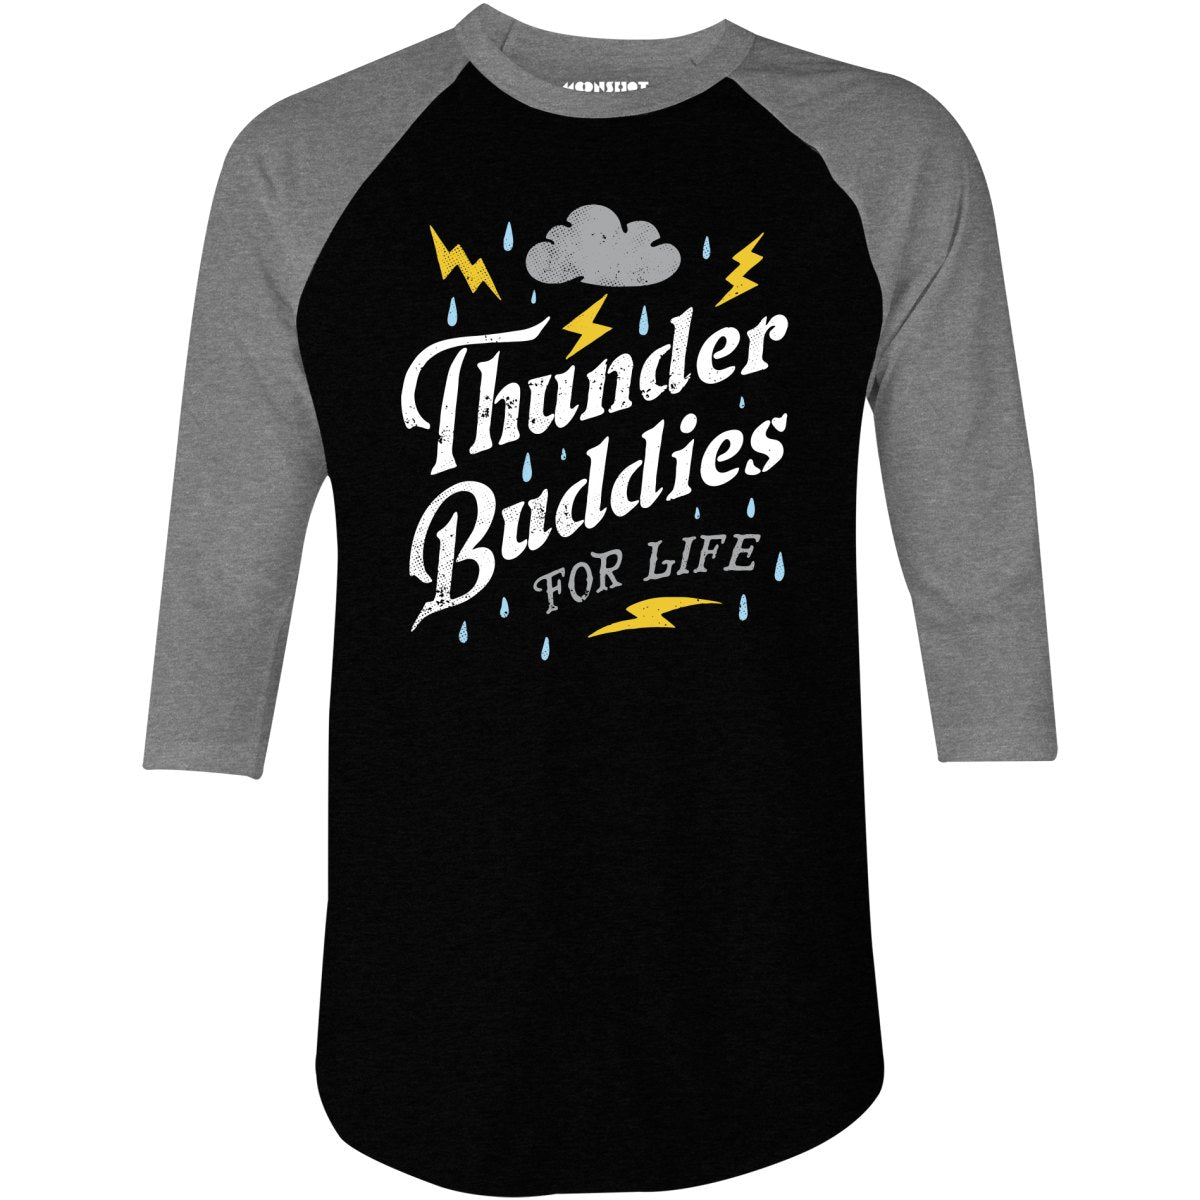 Thunder Buddies for Life - 3/4 Sleeve Raglan T-Shirt